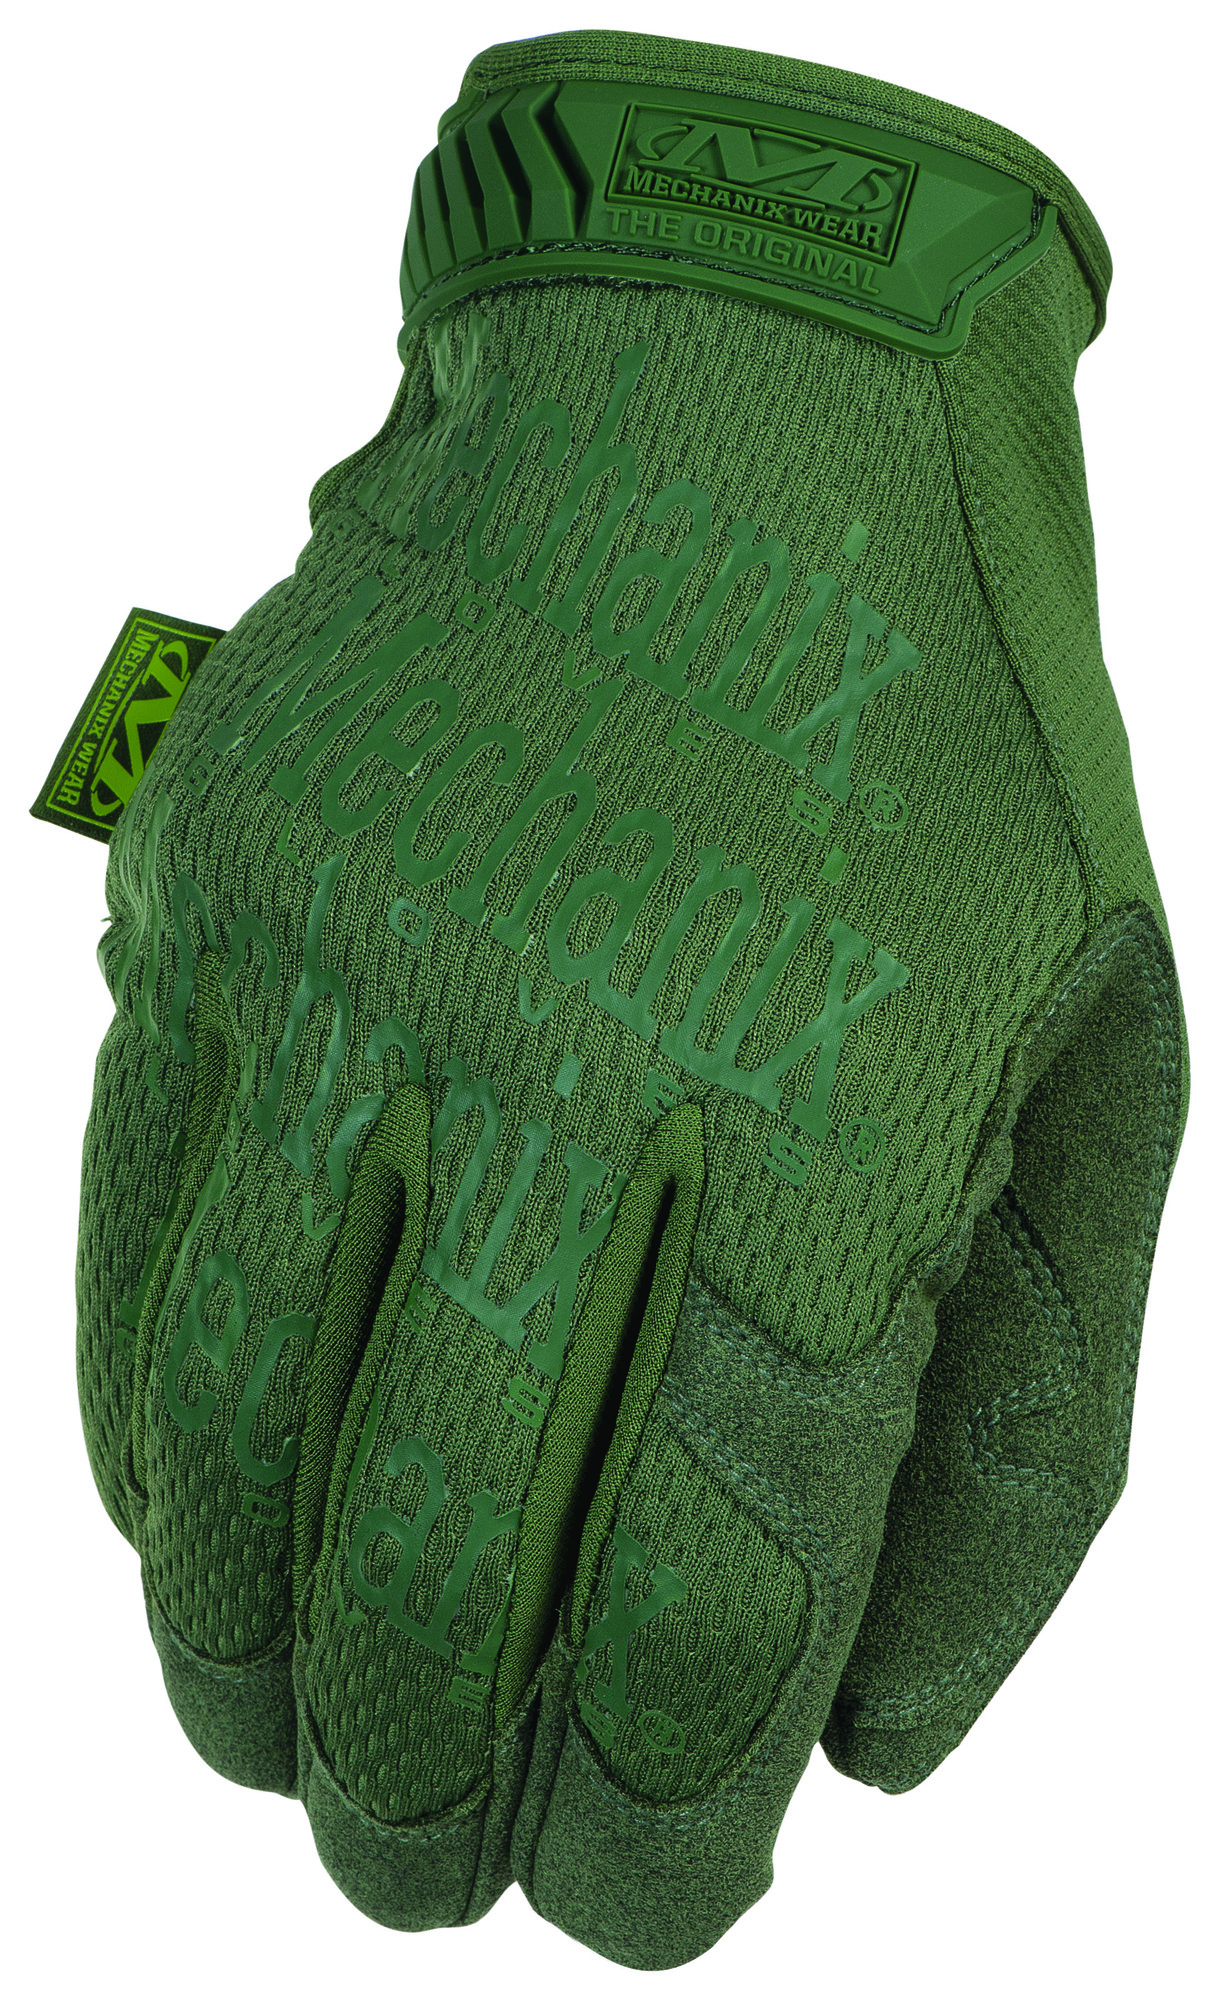 MECHANIX rukavice so syntetickou kožou Original - olivovo zelená XL/11